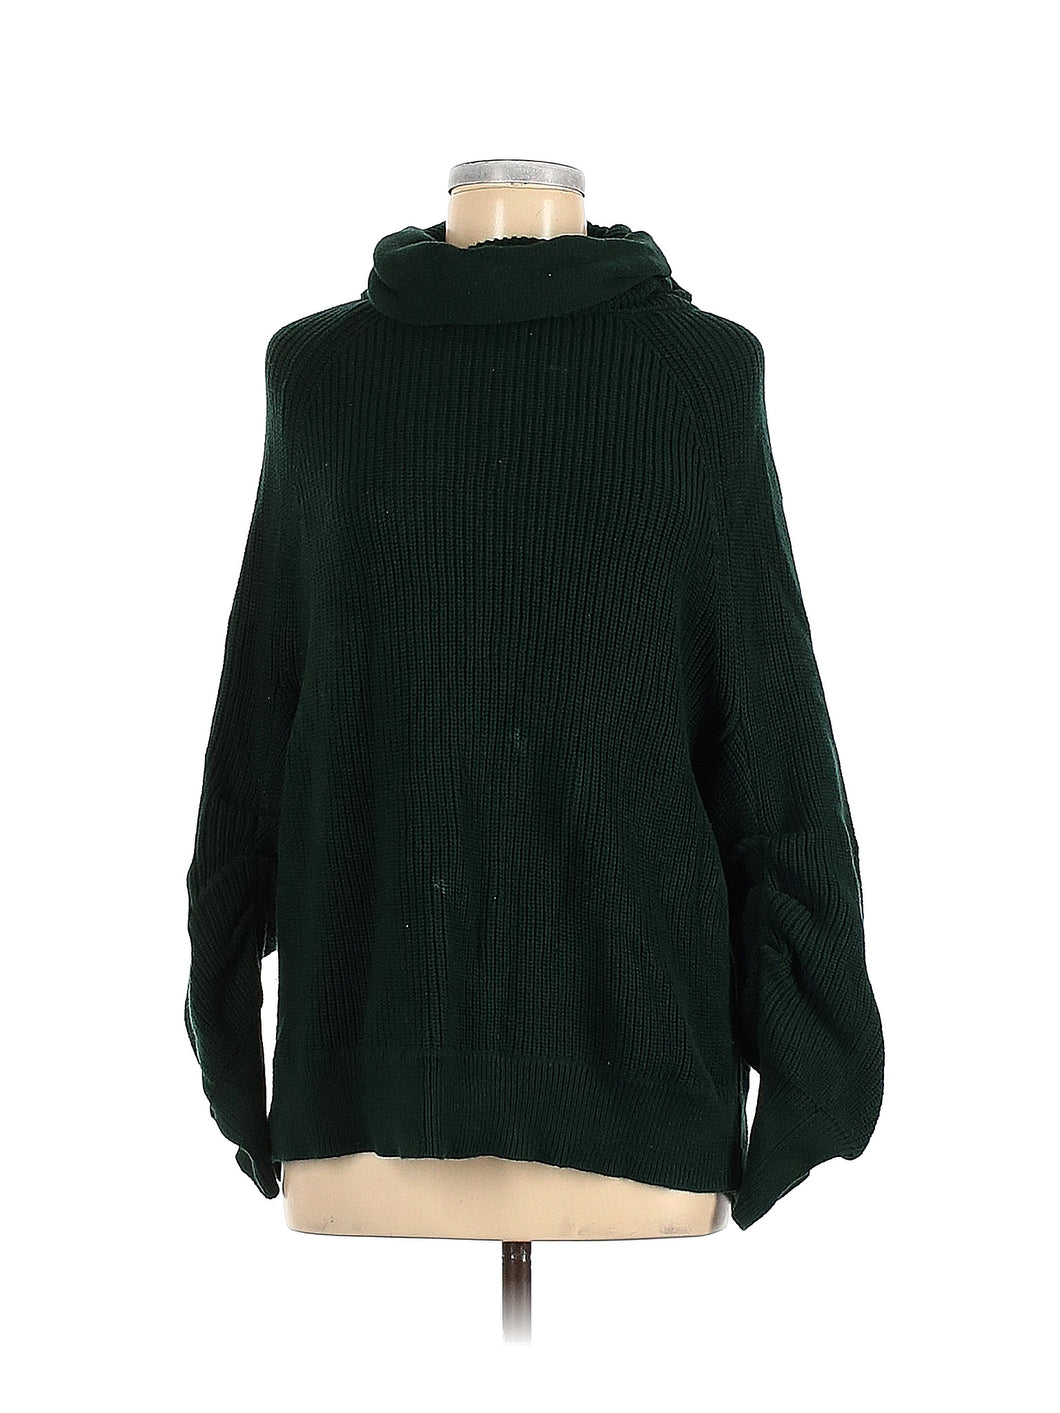 Cabi Cotton Chunky Turtleneck Tunic Sweater - Large